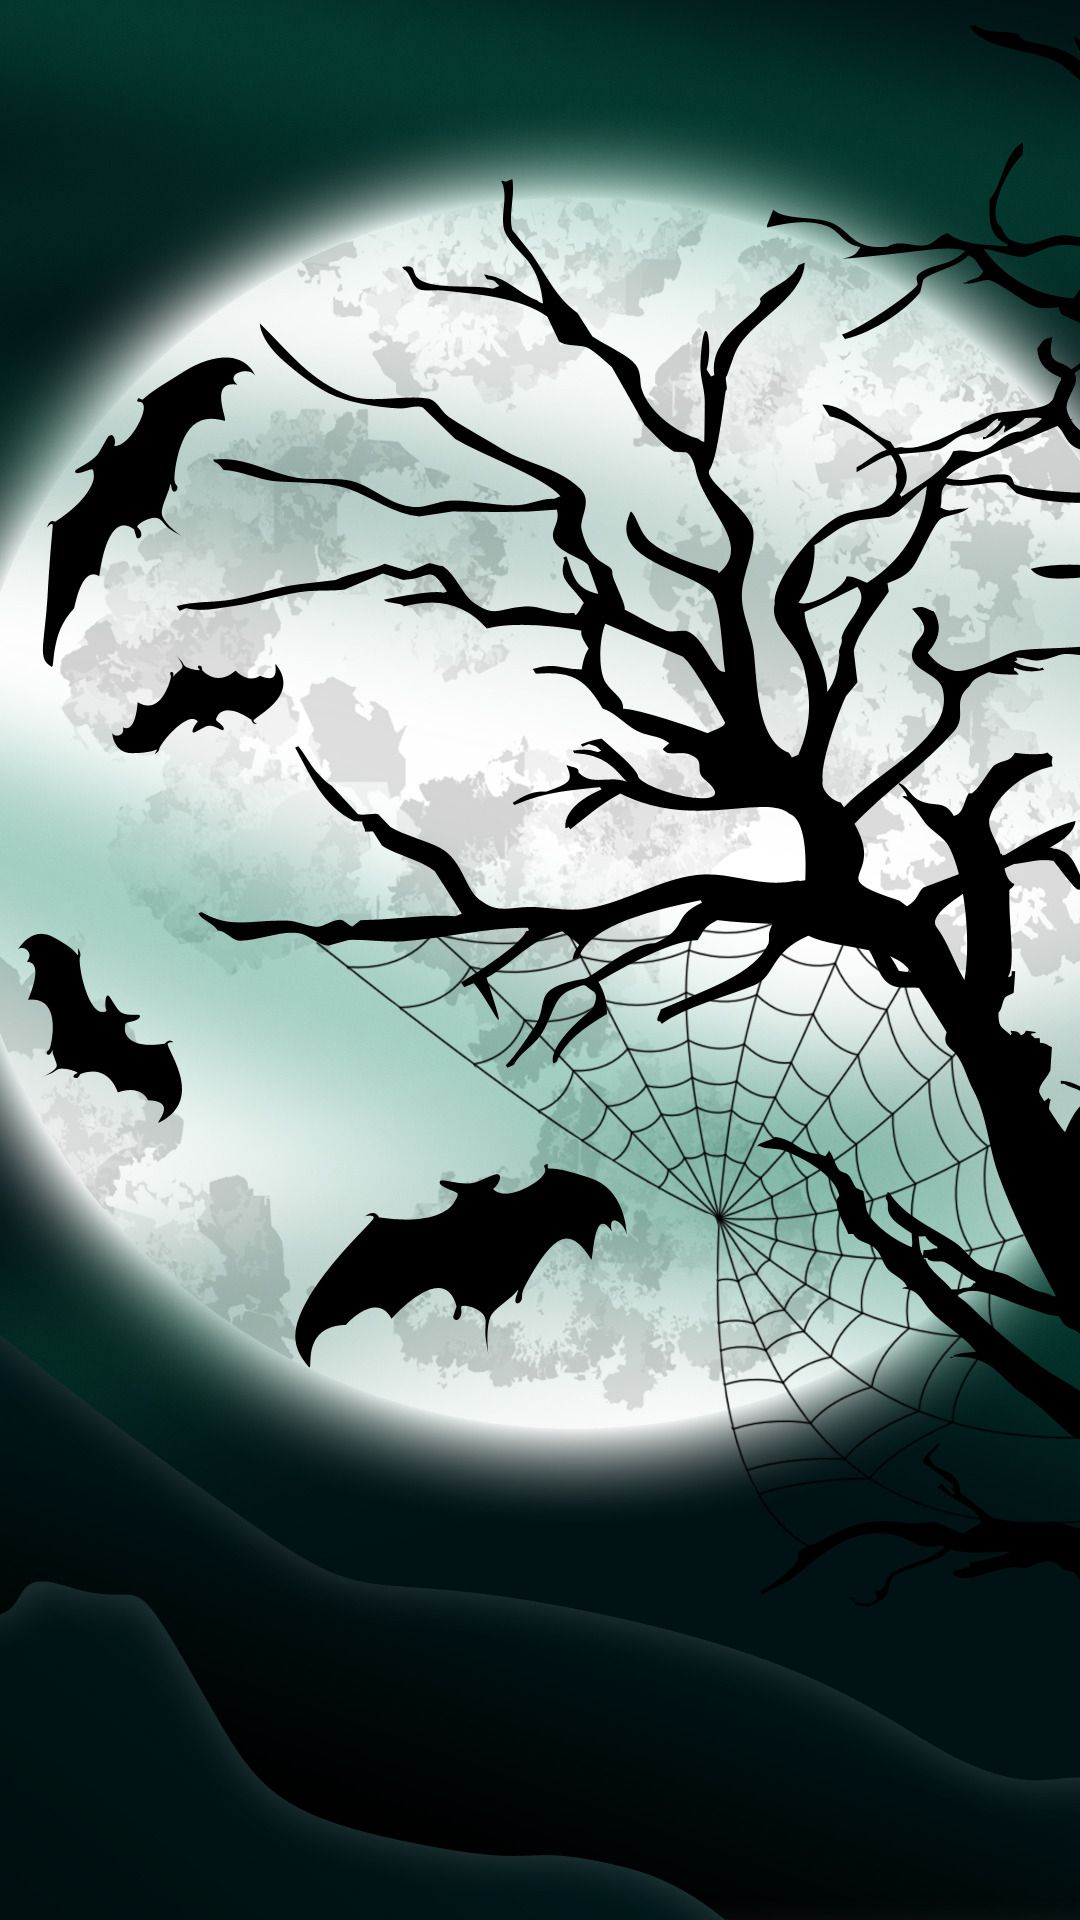 Night Bats Halloween iPhone 6 & iPhone 6 Plus Wallpaper. Halloween picture, Halloween painting, Halloween artwork